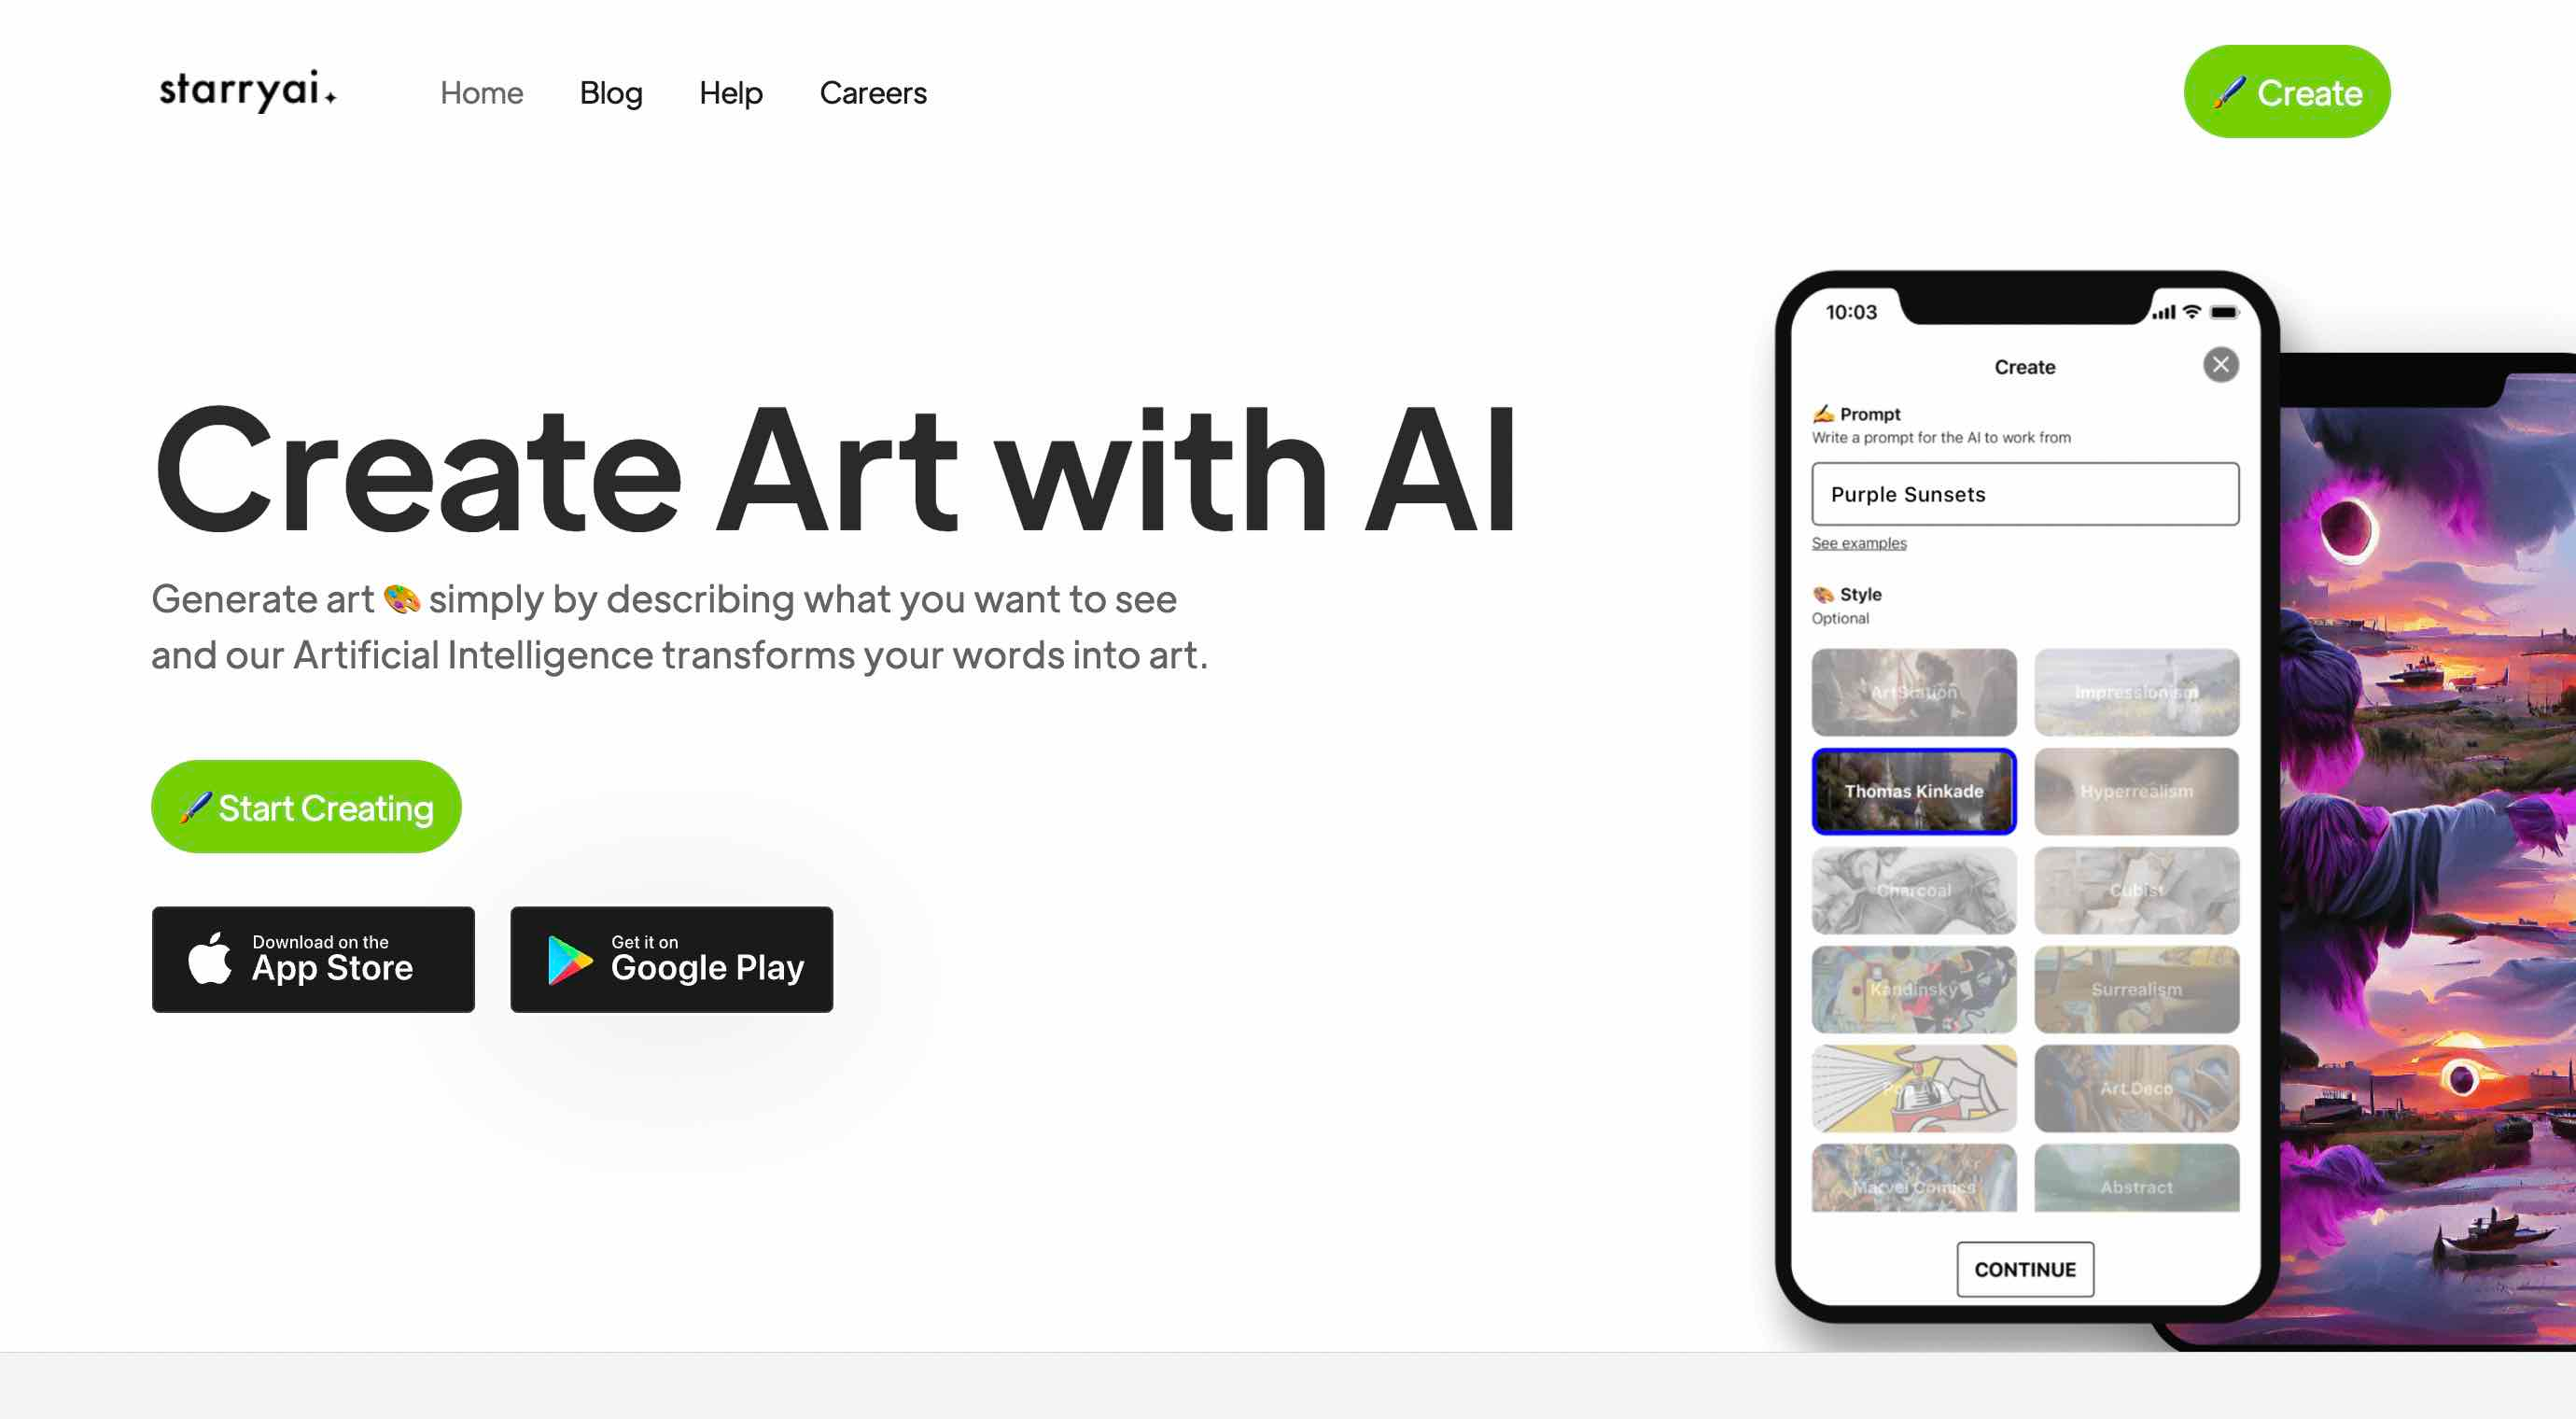 Starry AI homepage